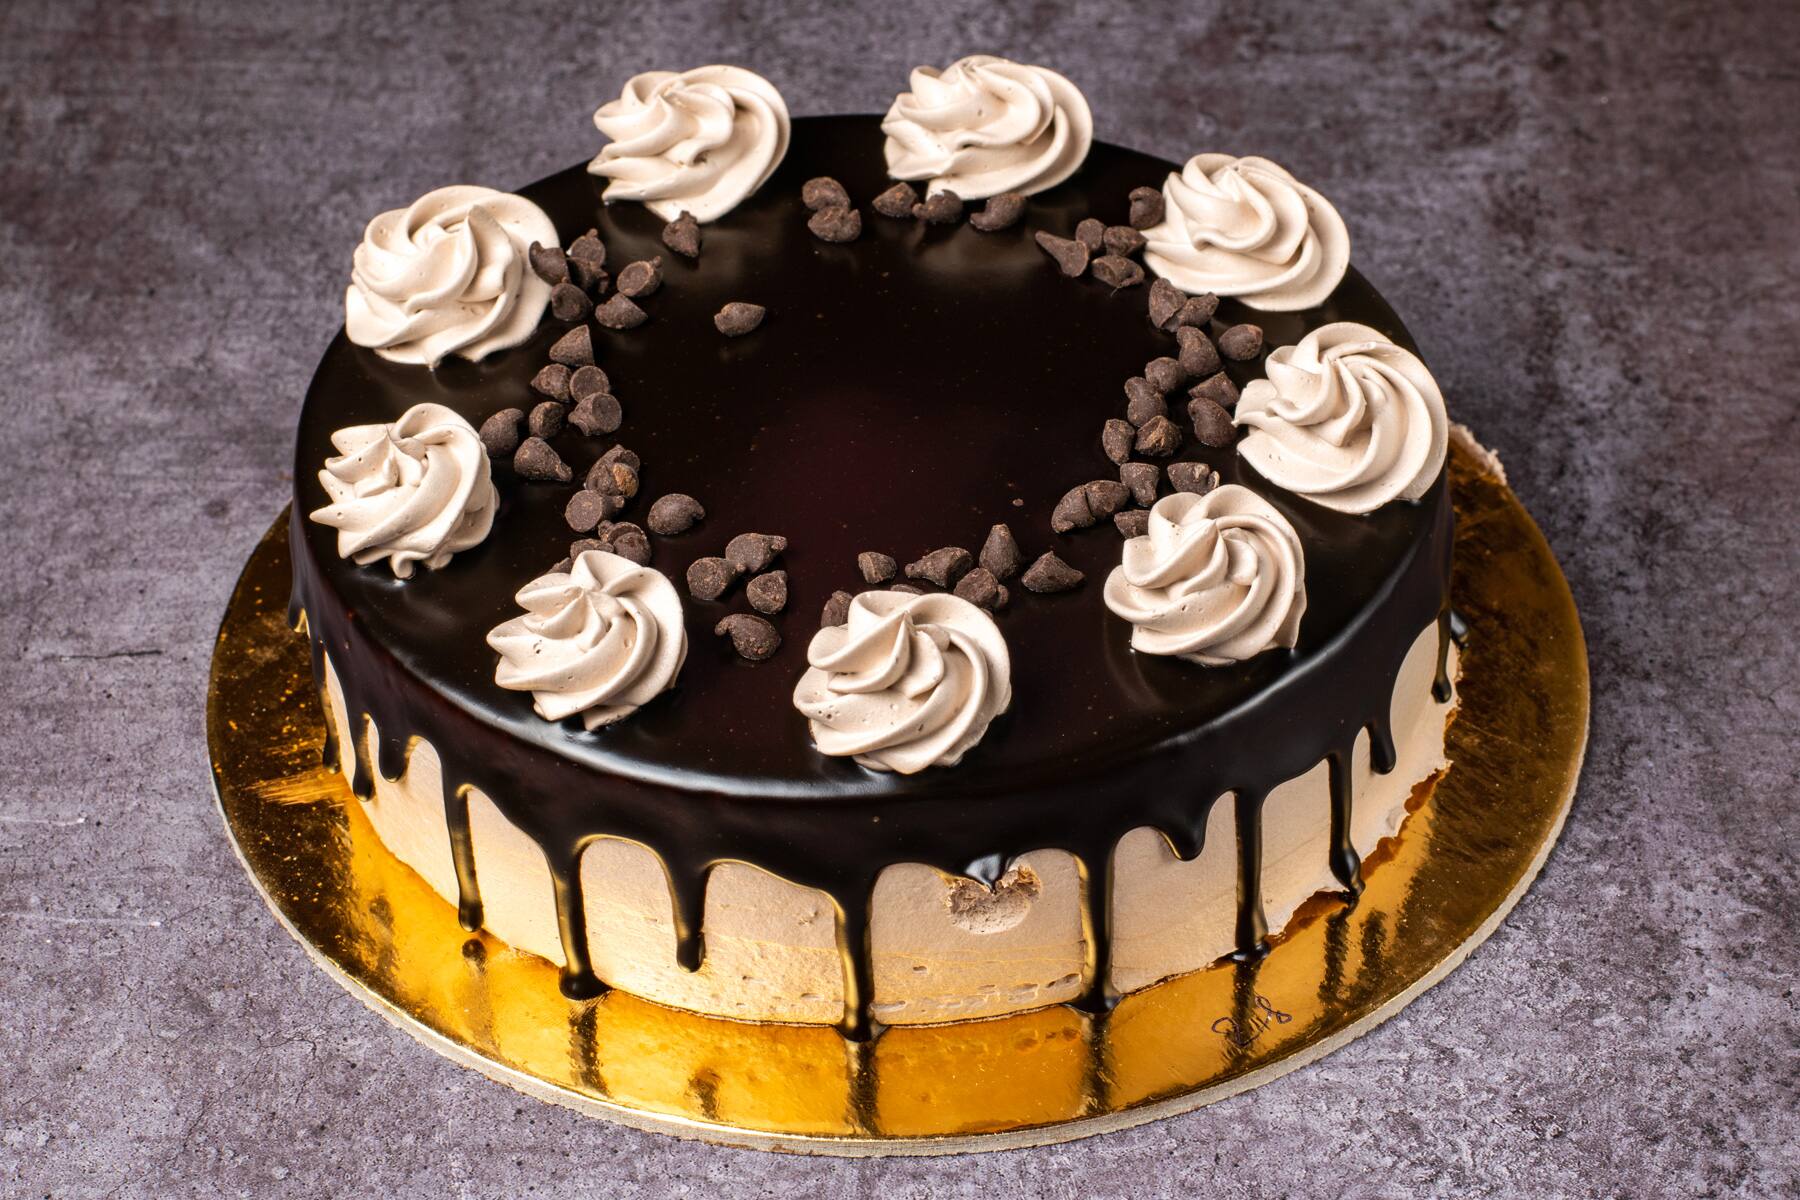 Buy/Send Kids Special Chocolate Cake 1 Kg Online- FNP